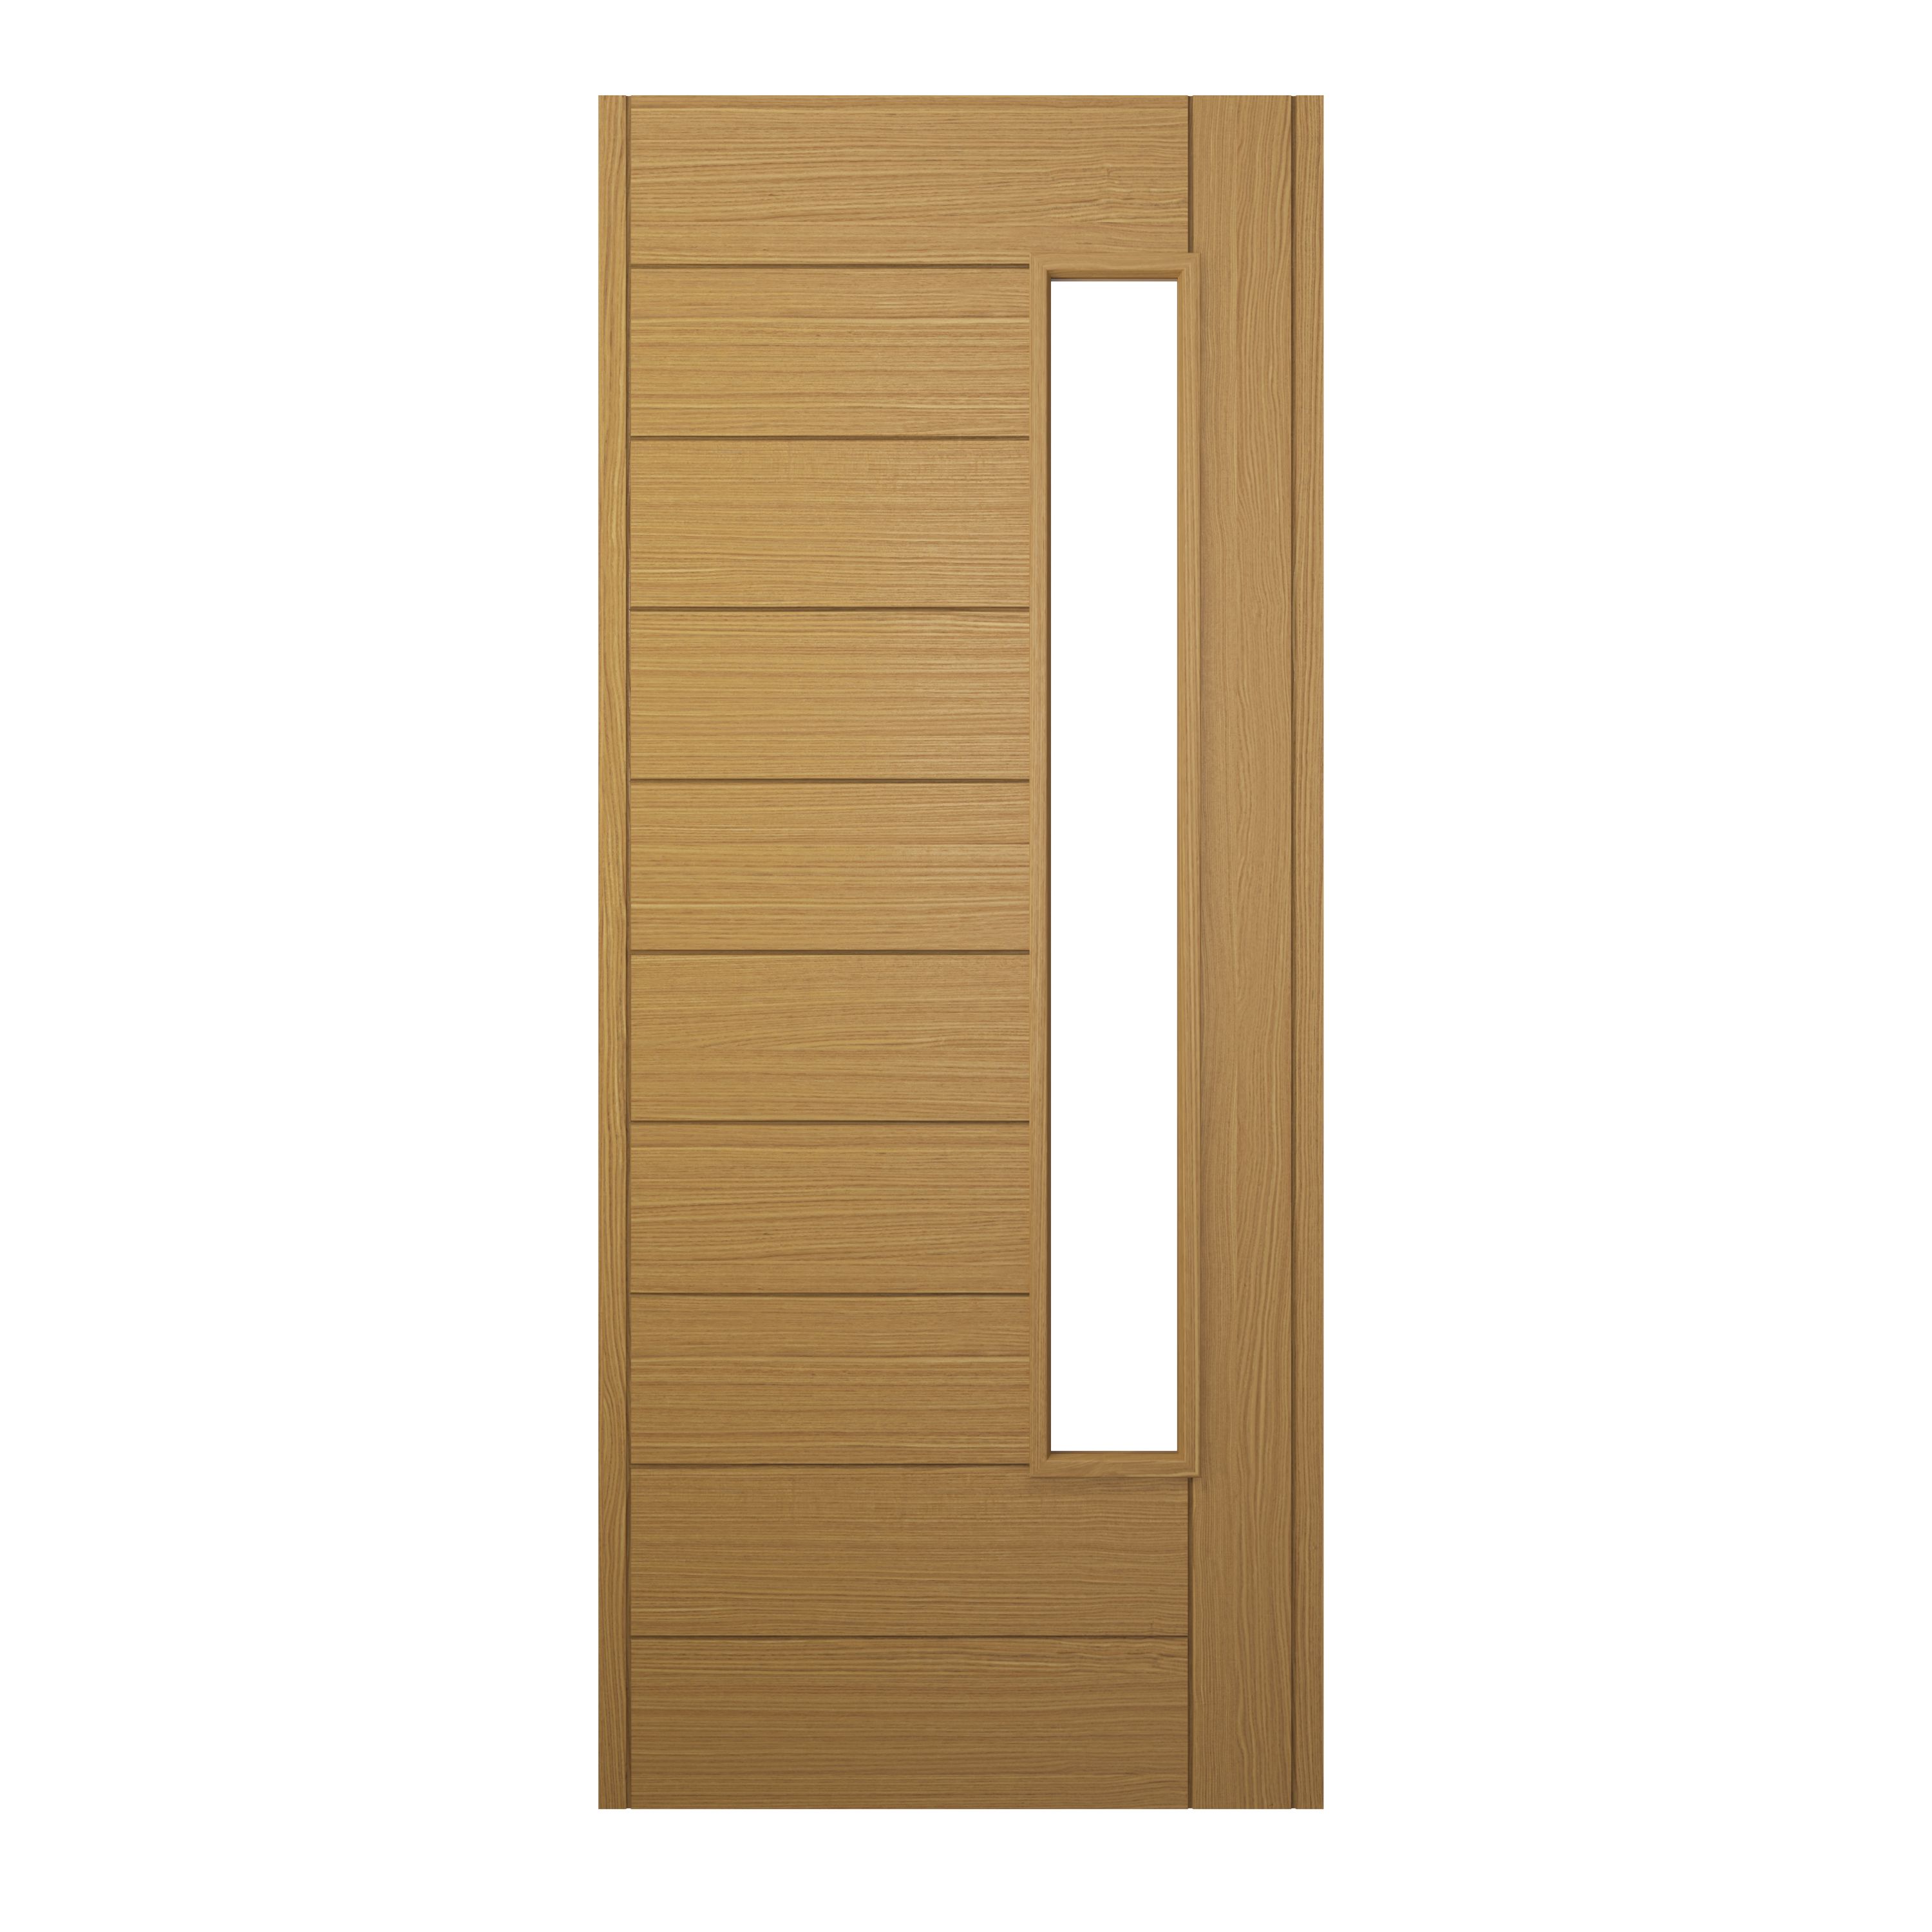 Image of JCI Ultimate Stockholm Oak External Hardwood Door with Handle - 2032 x 813mm